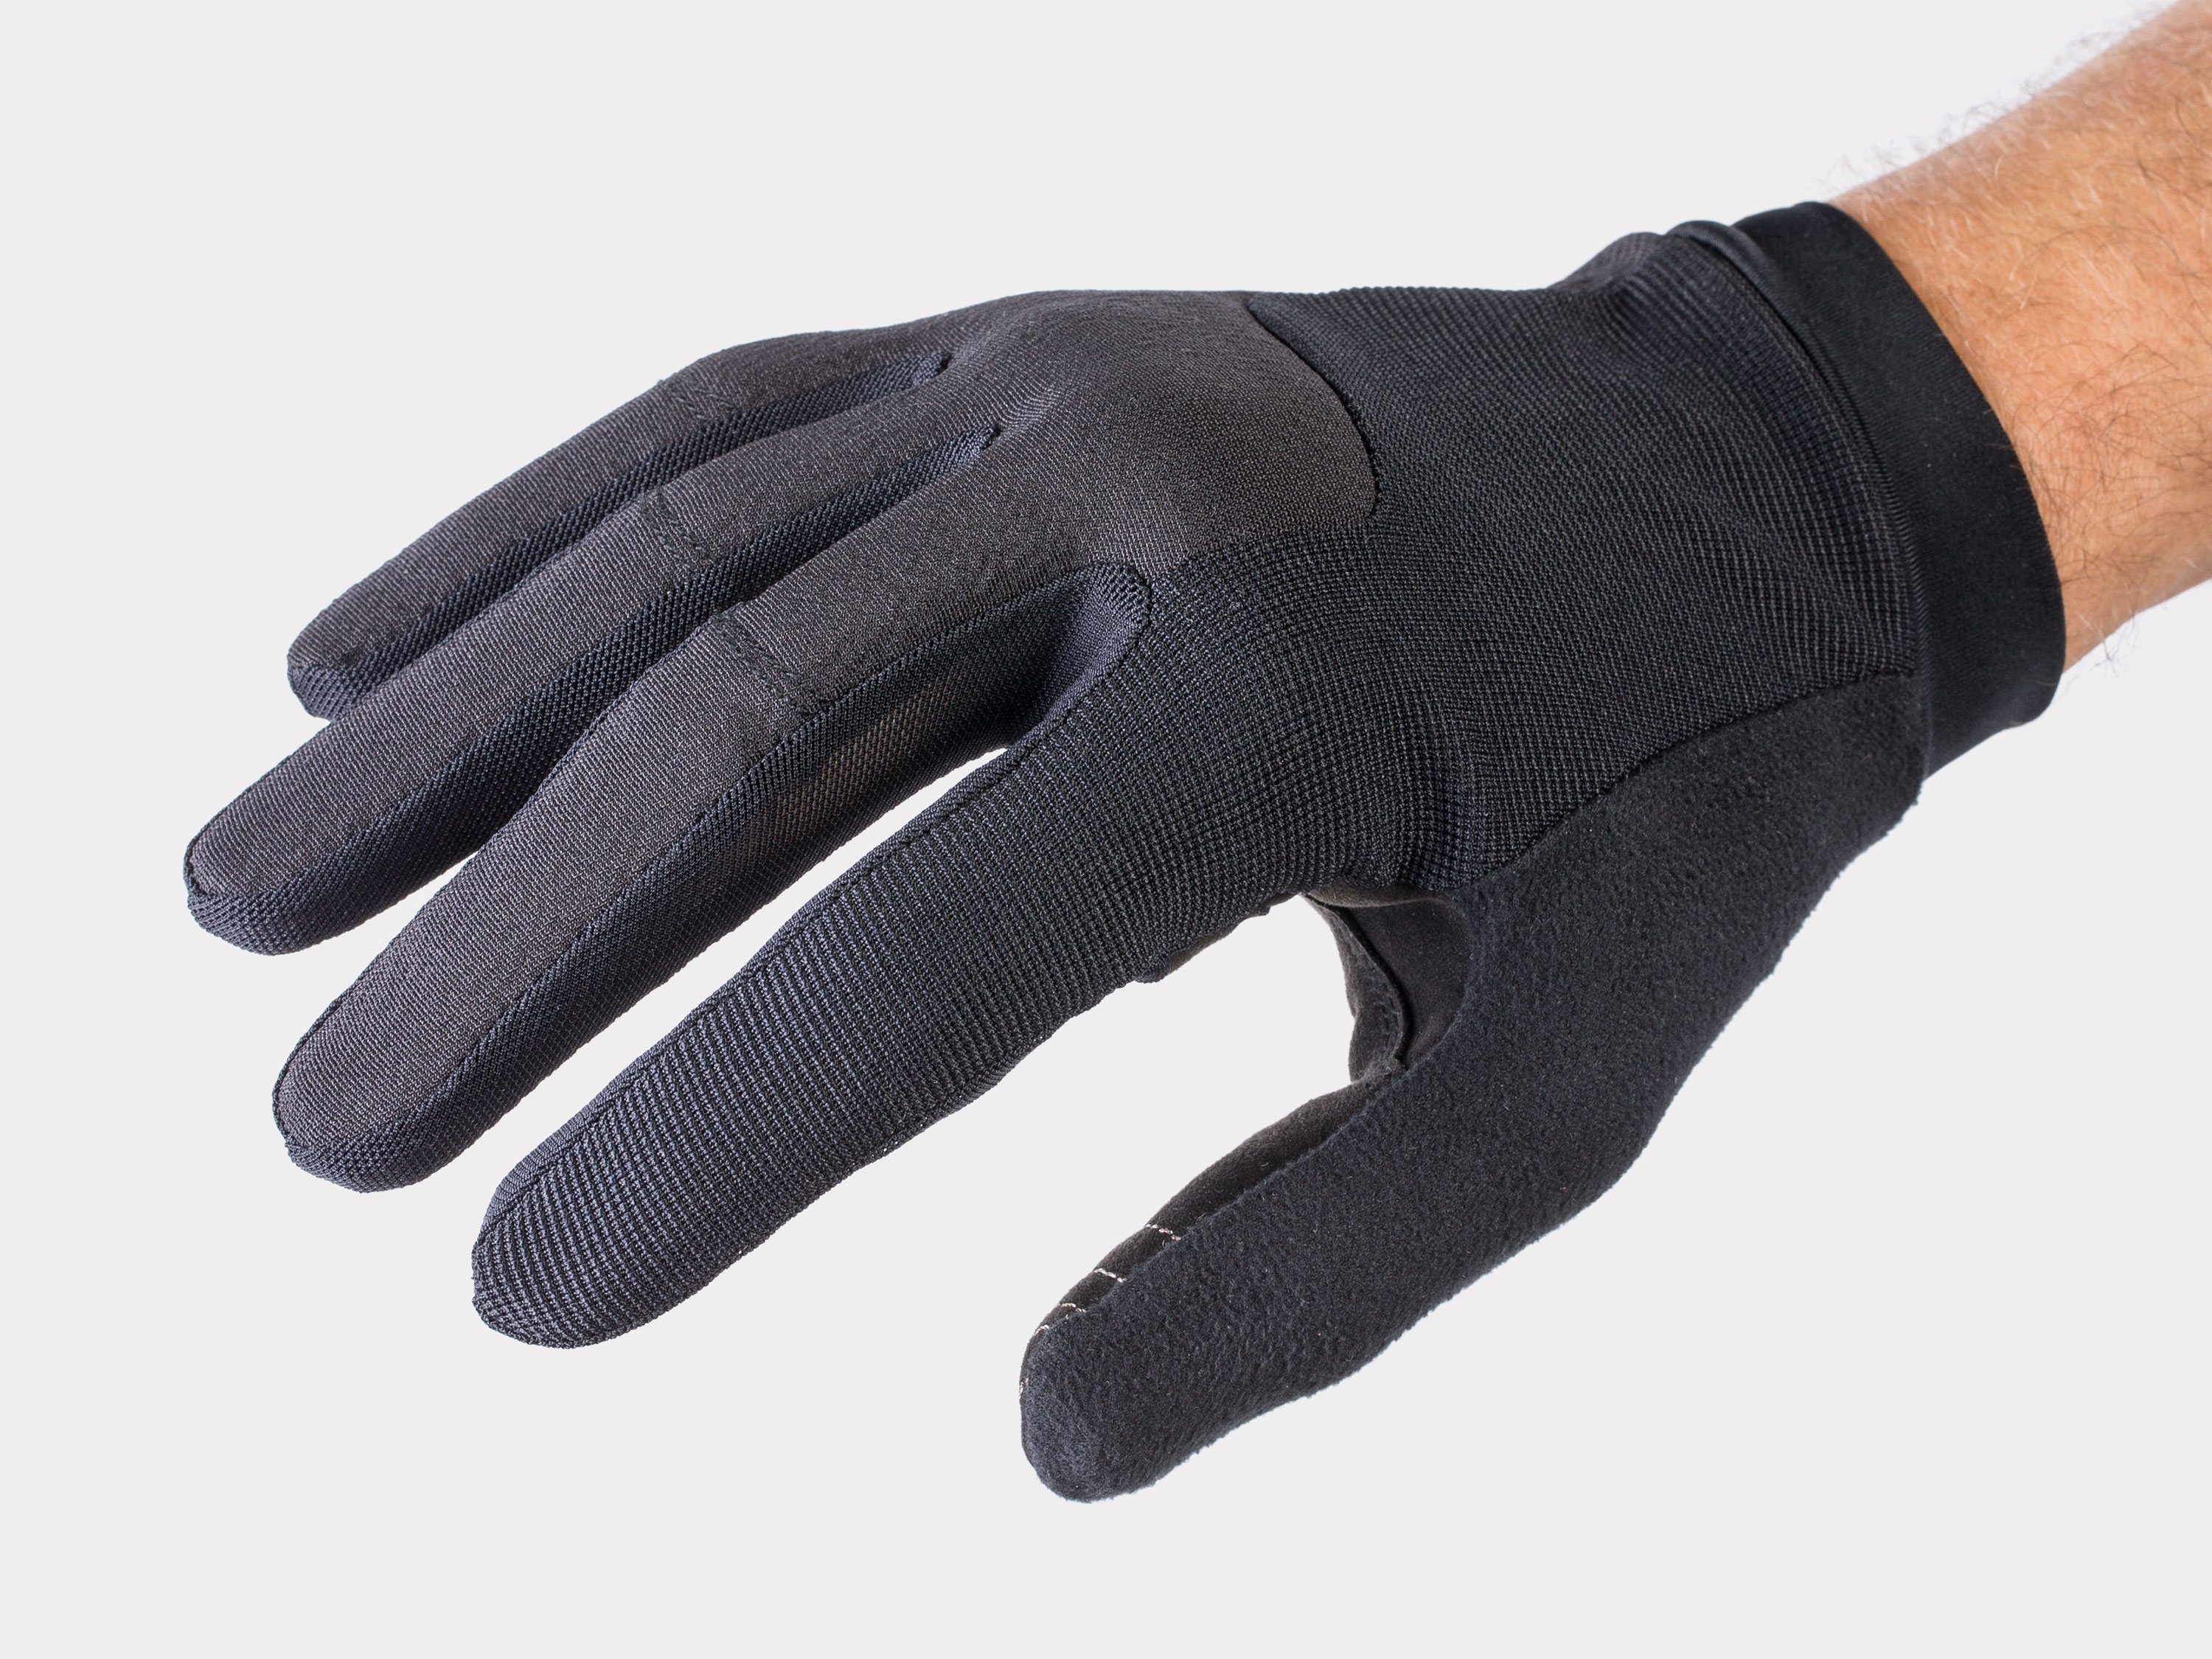 thin bike gloves